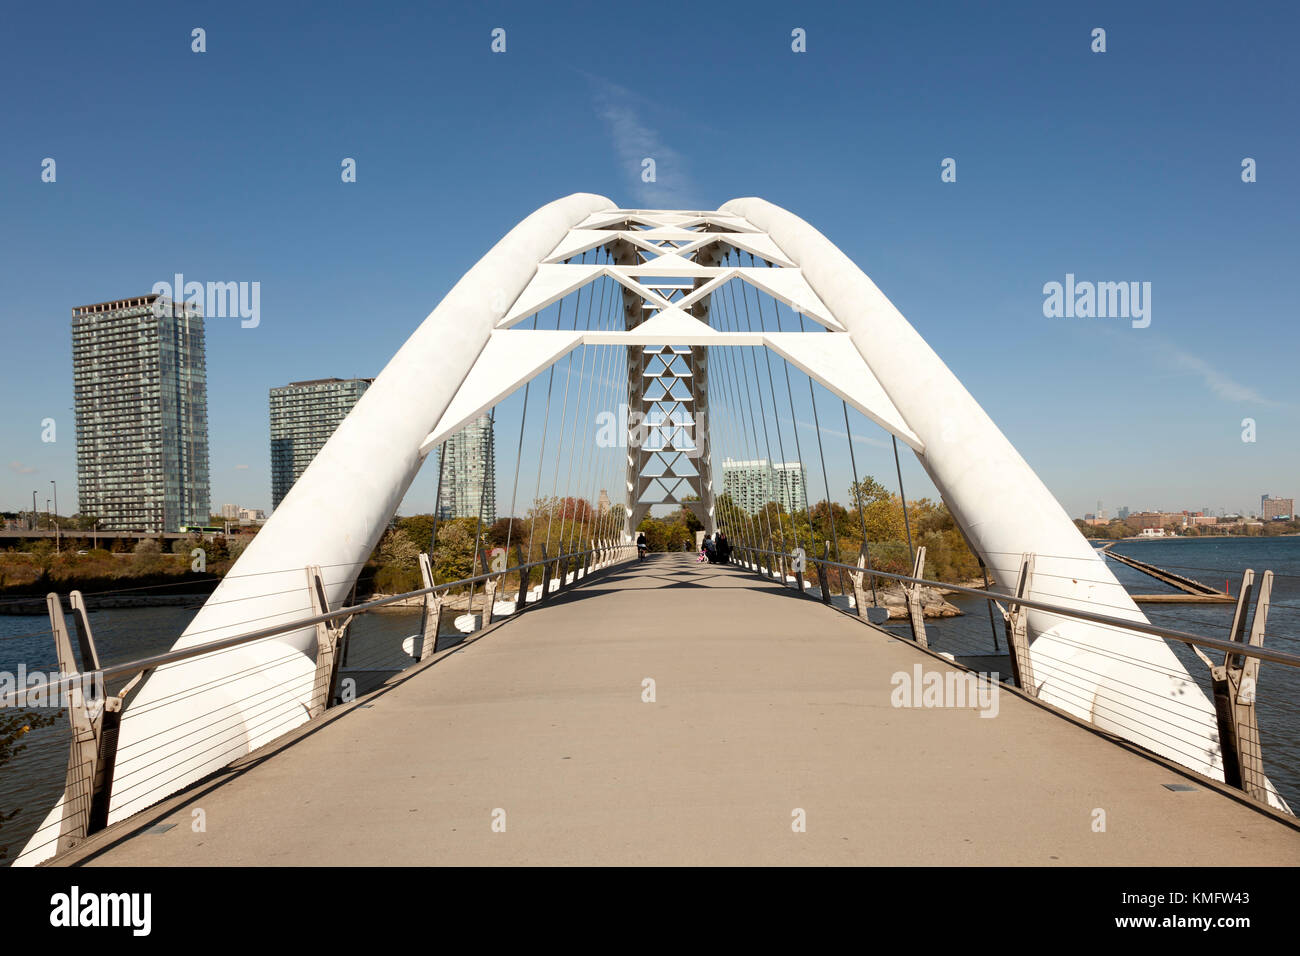 Toronto, Canada - Oct 19, 2017: The Humber Bay Arch Bridge in the city of Toronto, Canada Stock Photo